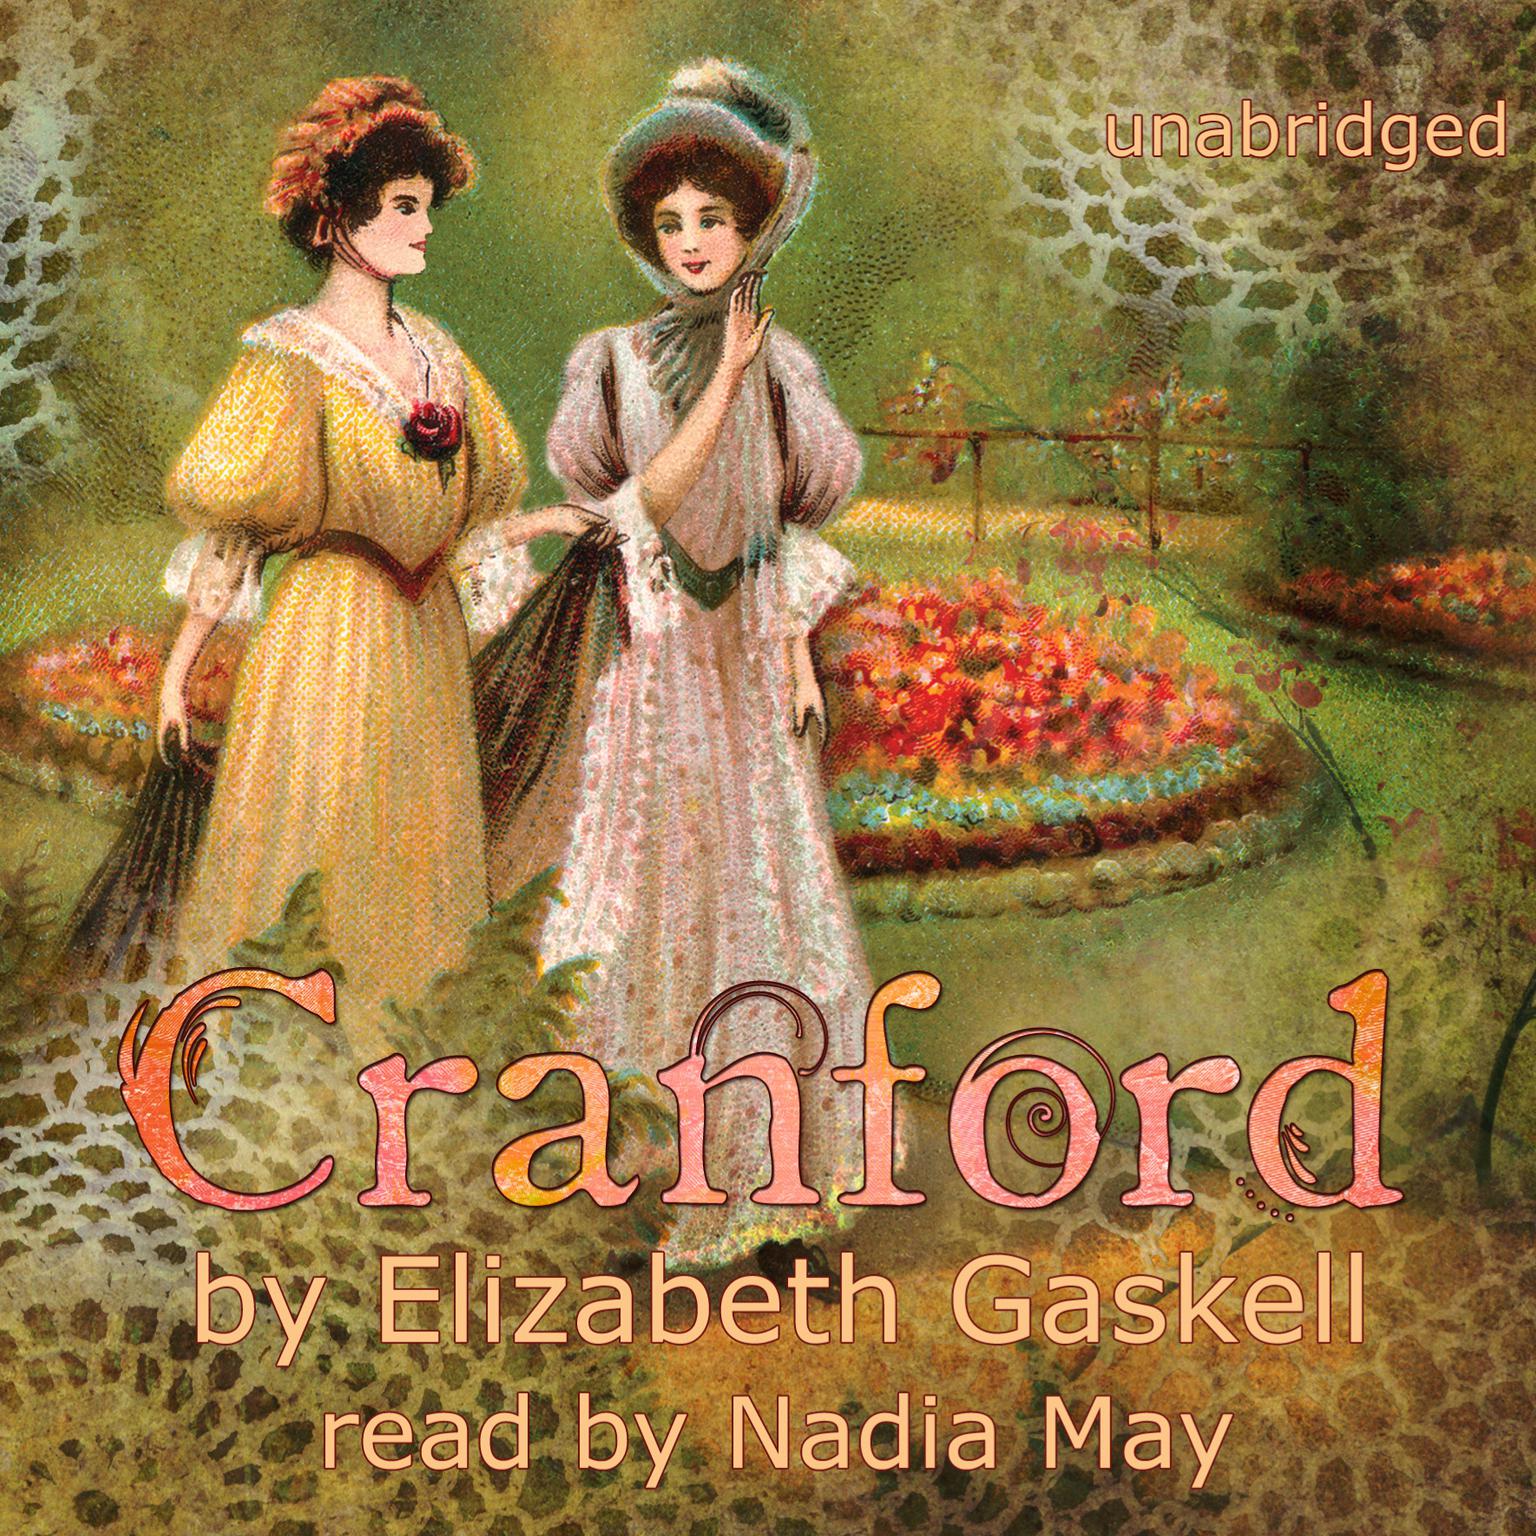 Cranford Audiobook, by Elizabeth Gaskell